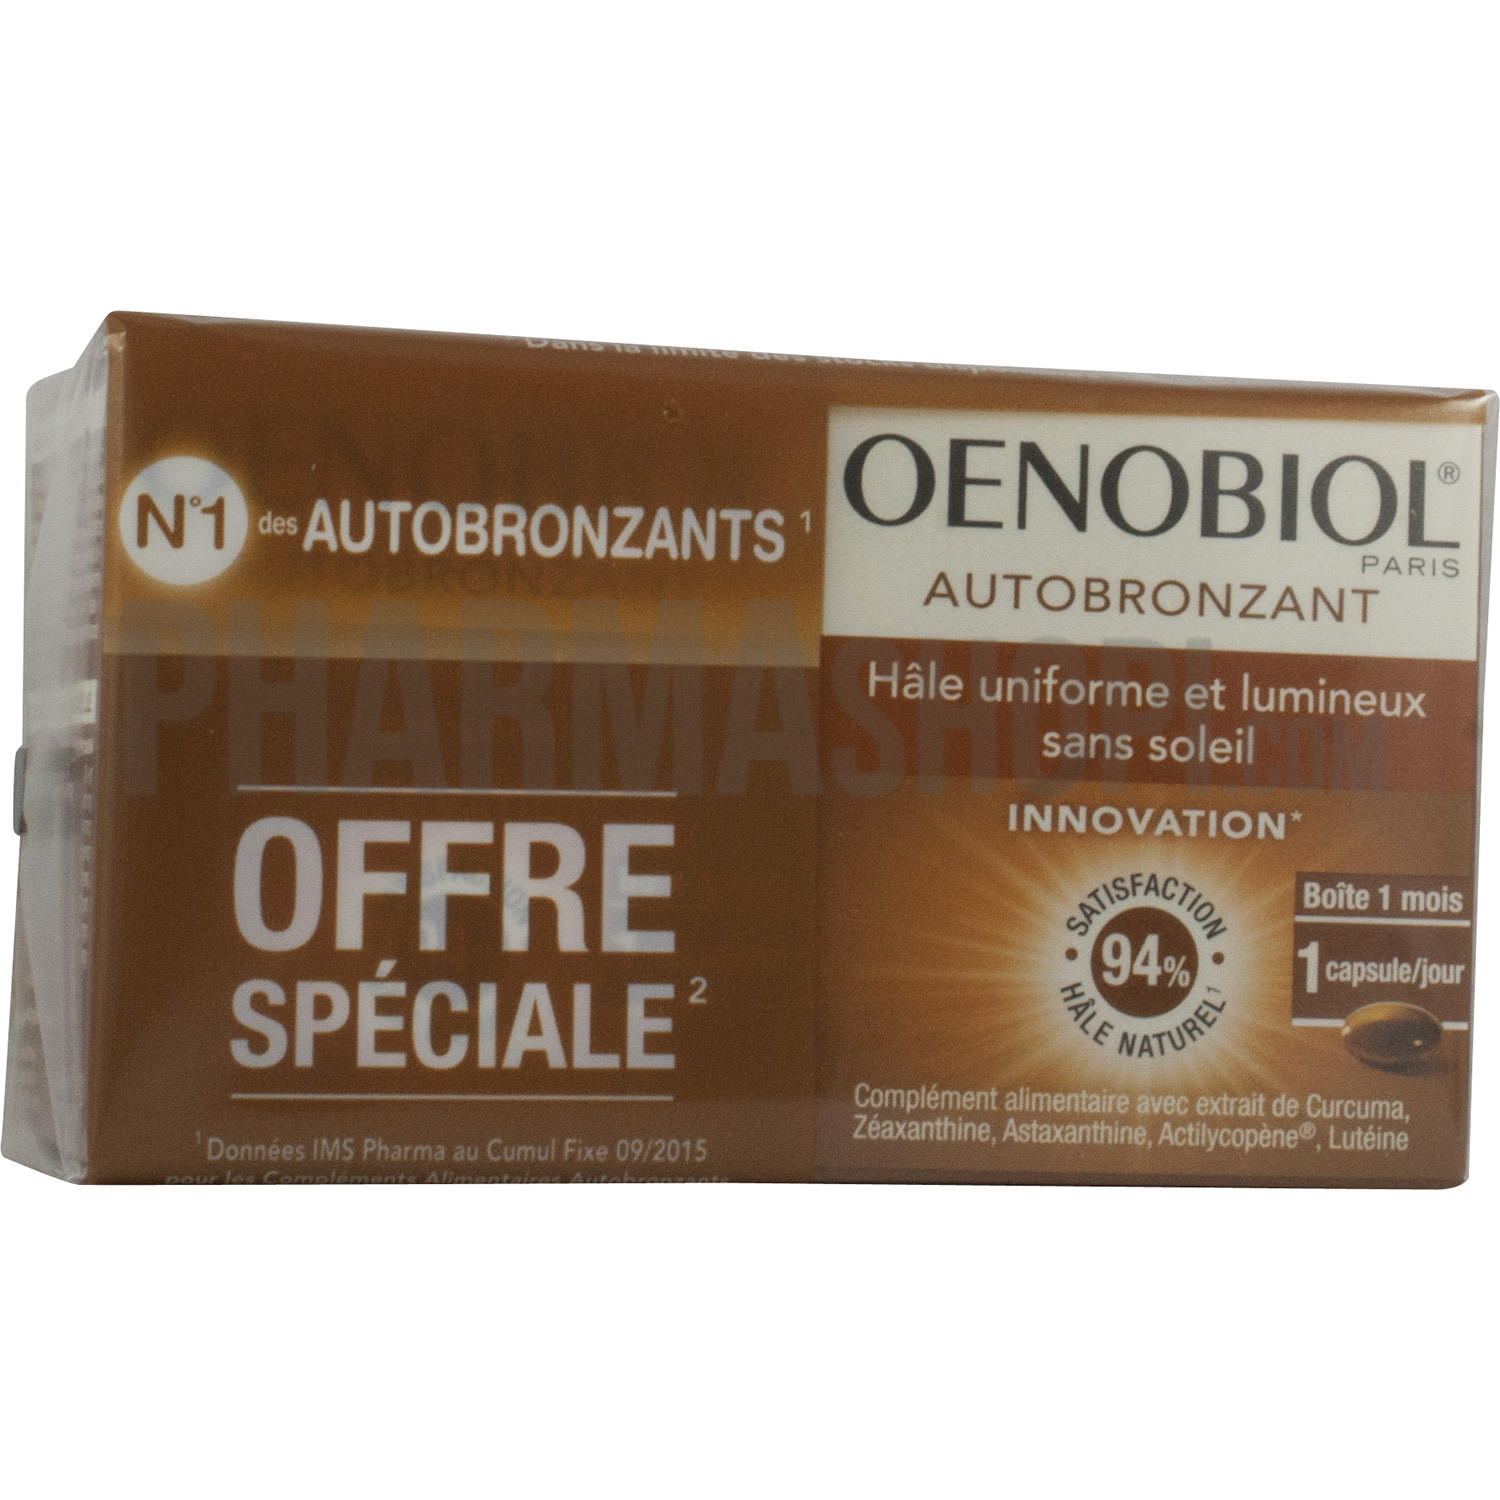 Oenobiol autobronzant - lot de 2 boites de 30 capsules